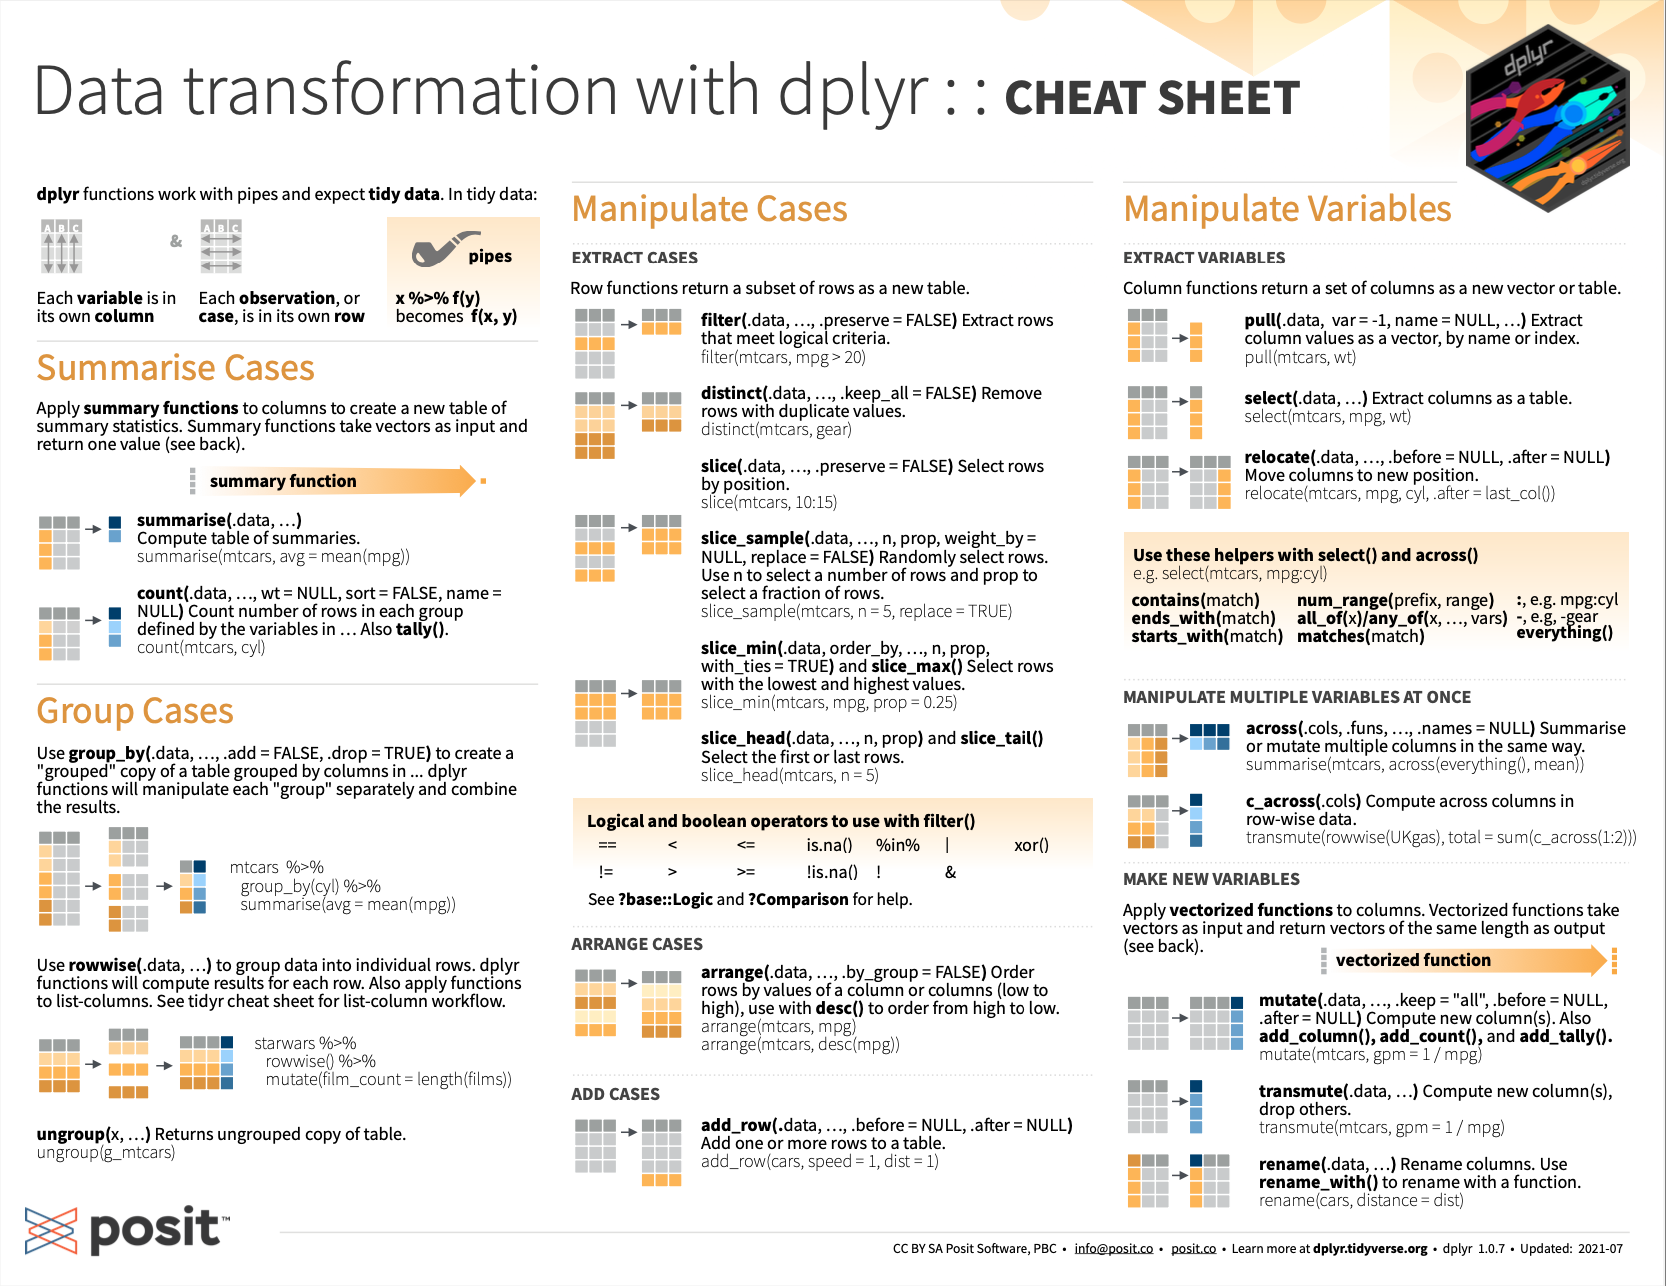 Data transformation with **dplyr** summary from [RStudio cheatsheets](https://www.rstudio.com/resources/cheatsheets/).